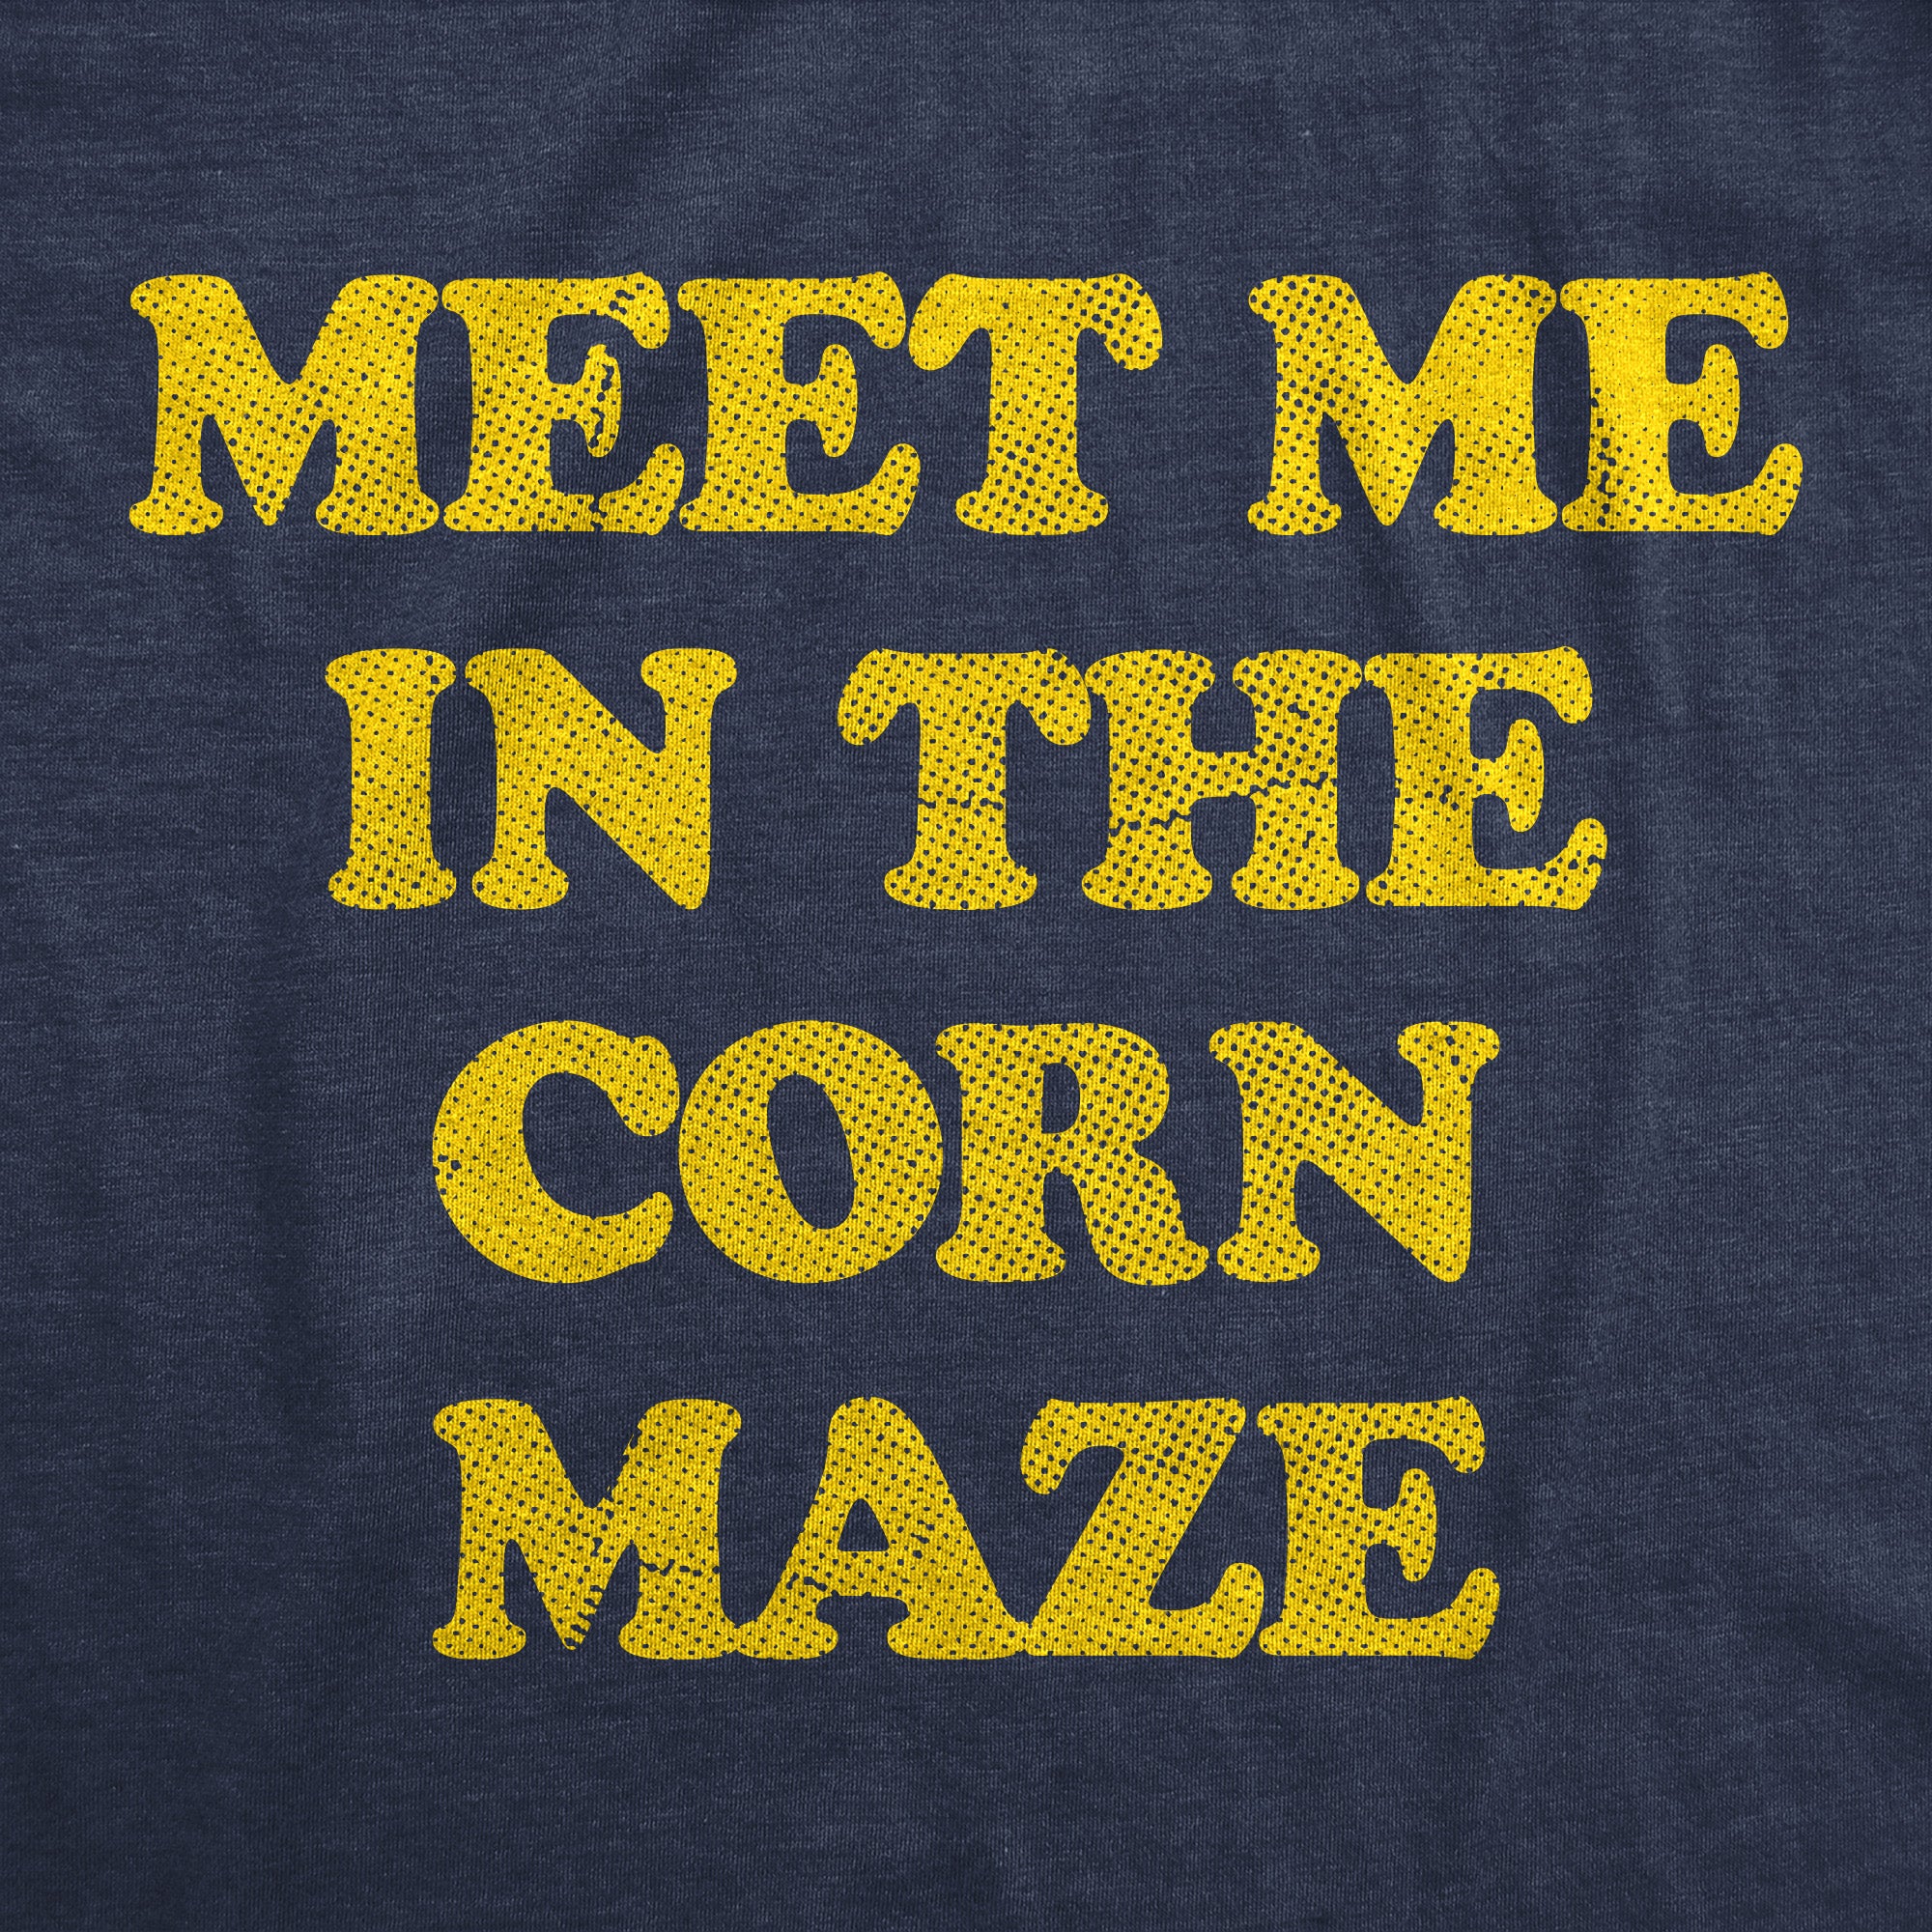 Funny Heather Navy - CORN Meet Me In The Corn Maze Mens T Shirt Nerdy Halloween Tee